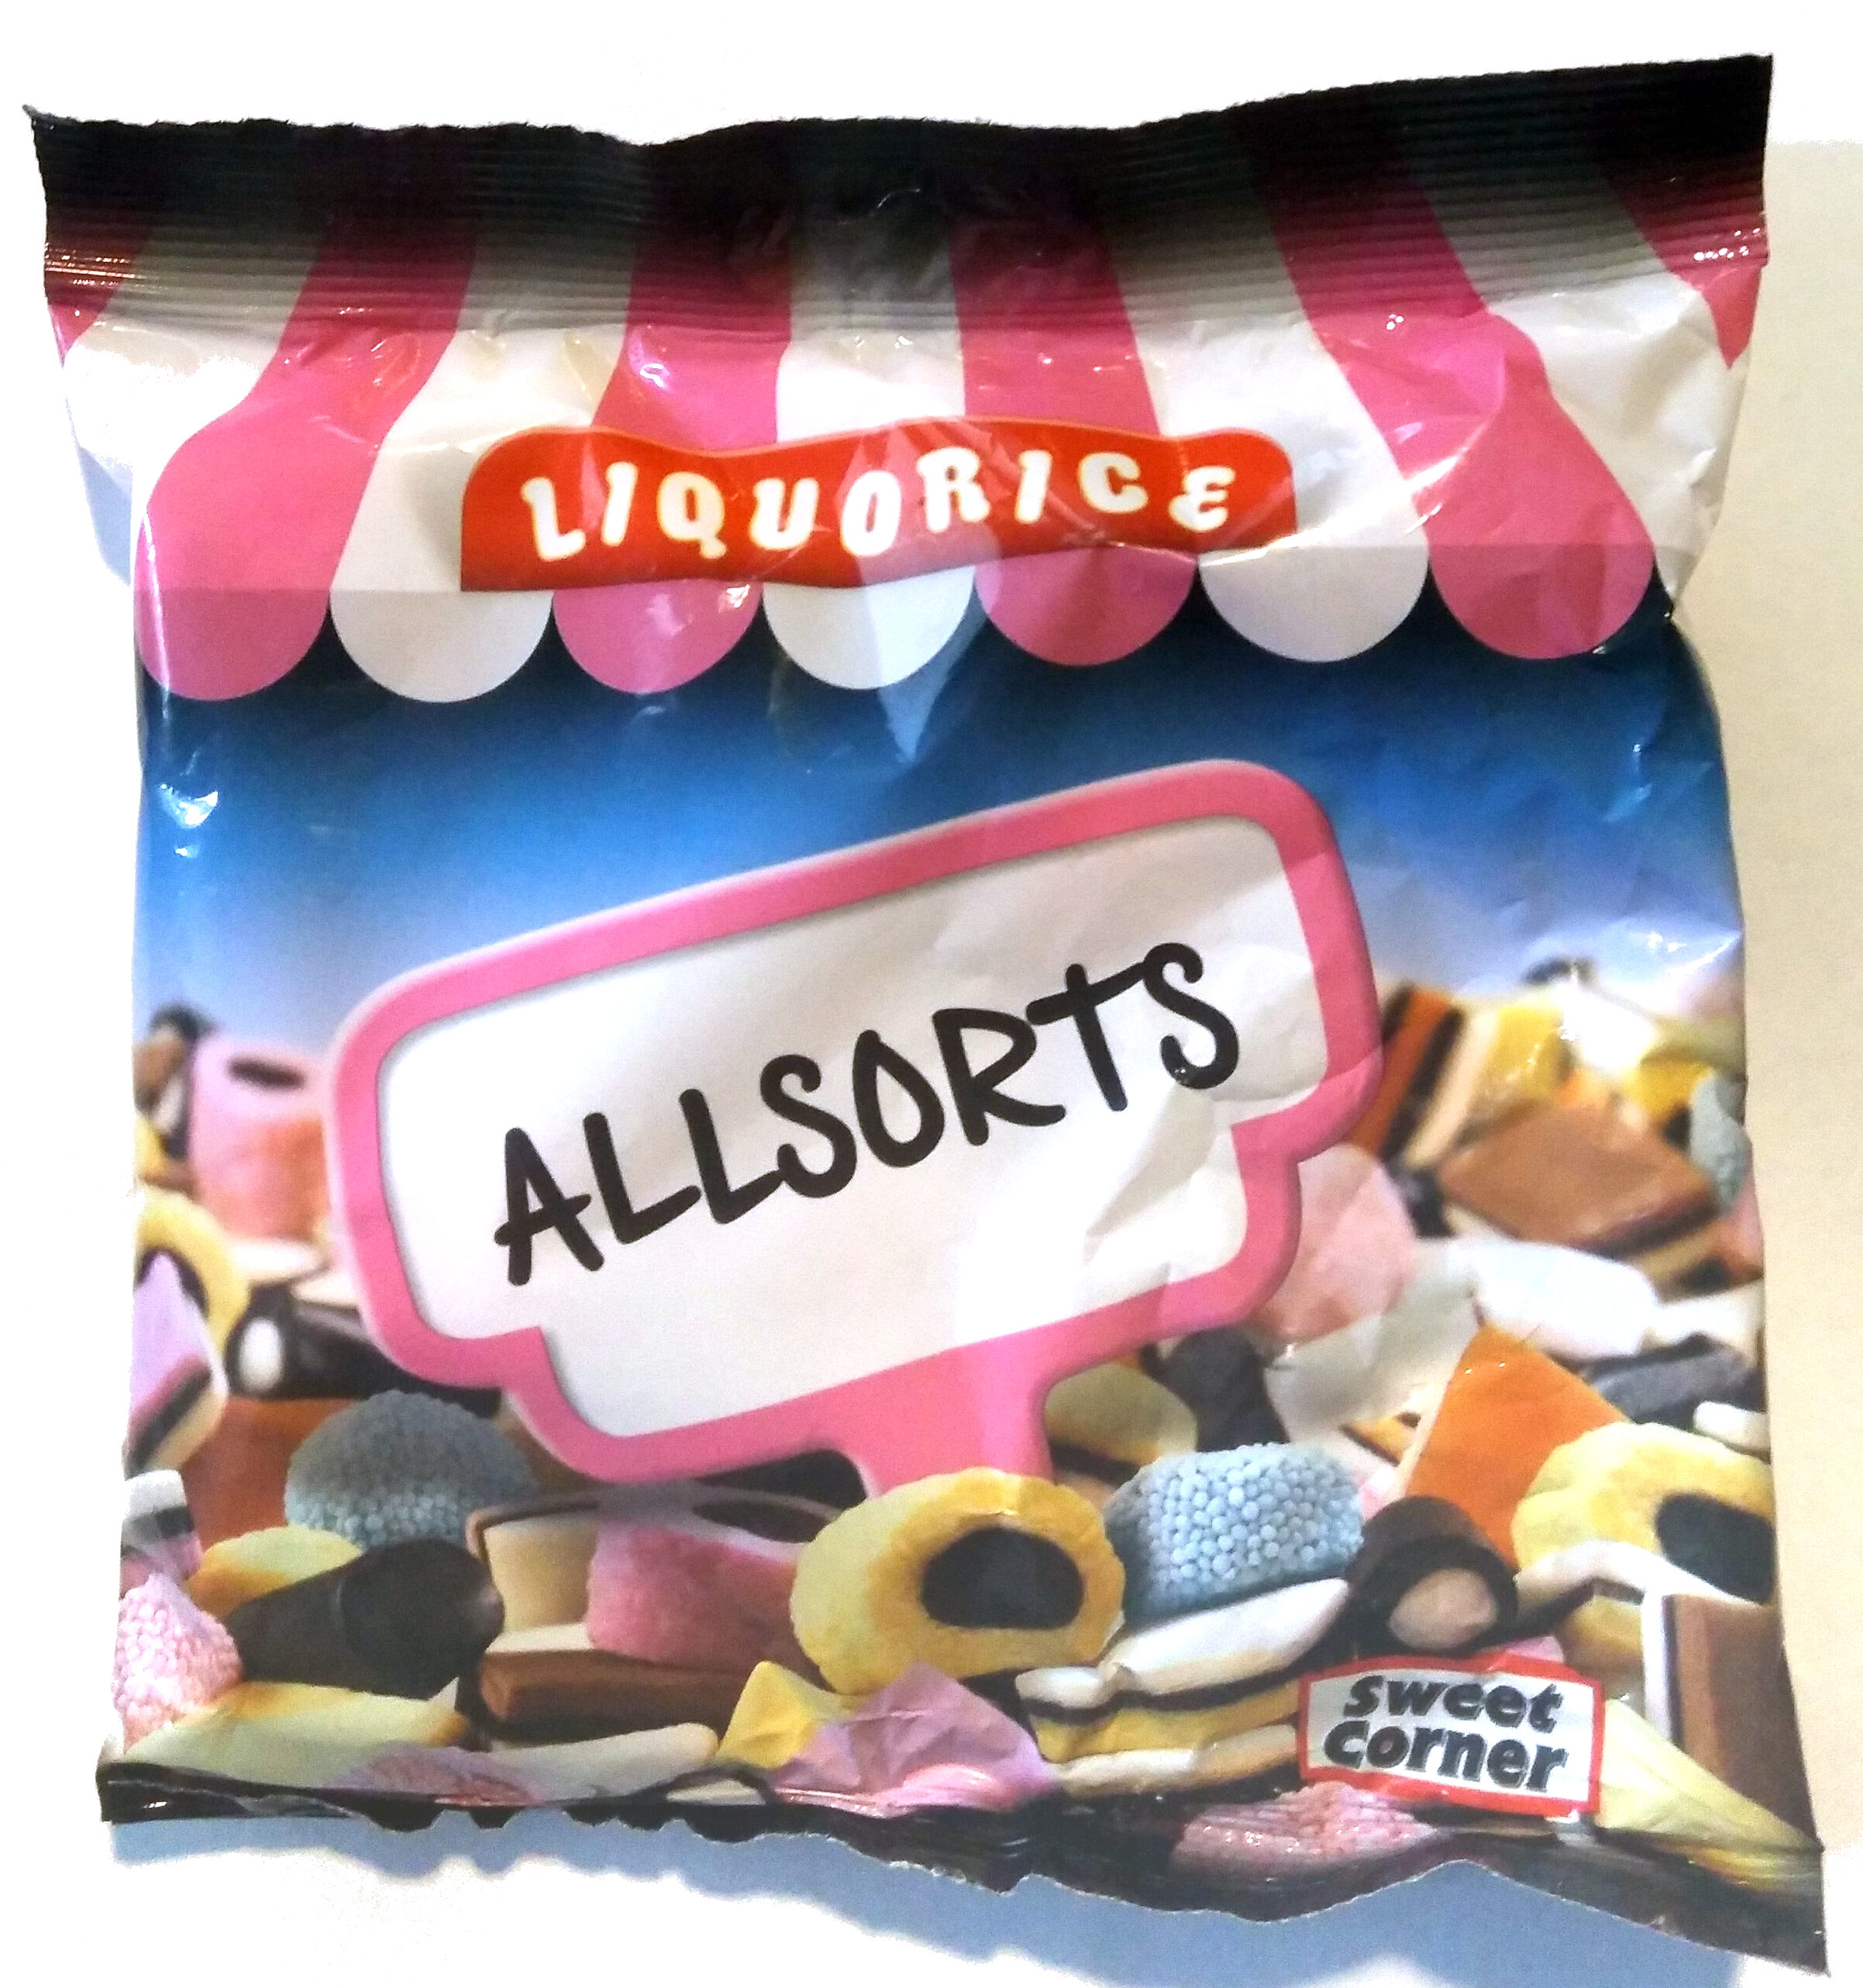 Allsorts - Produkt - da